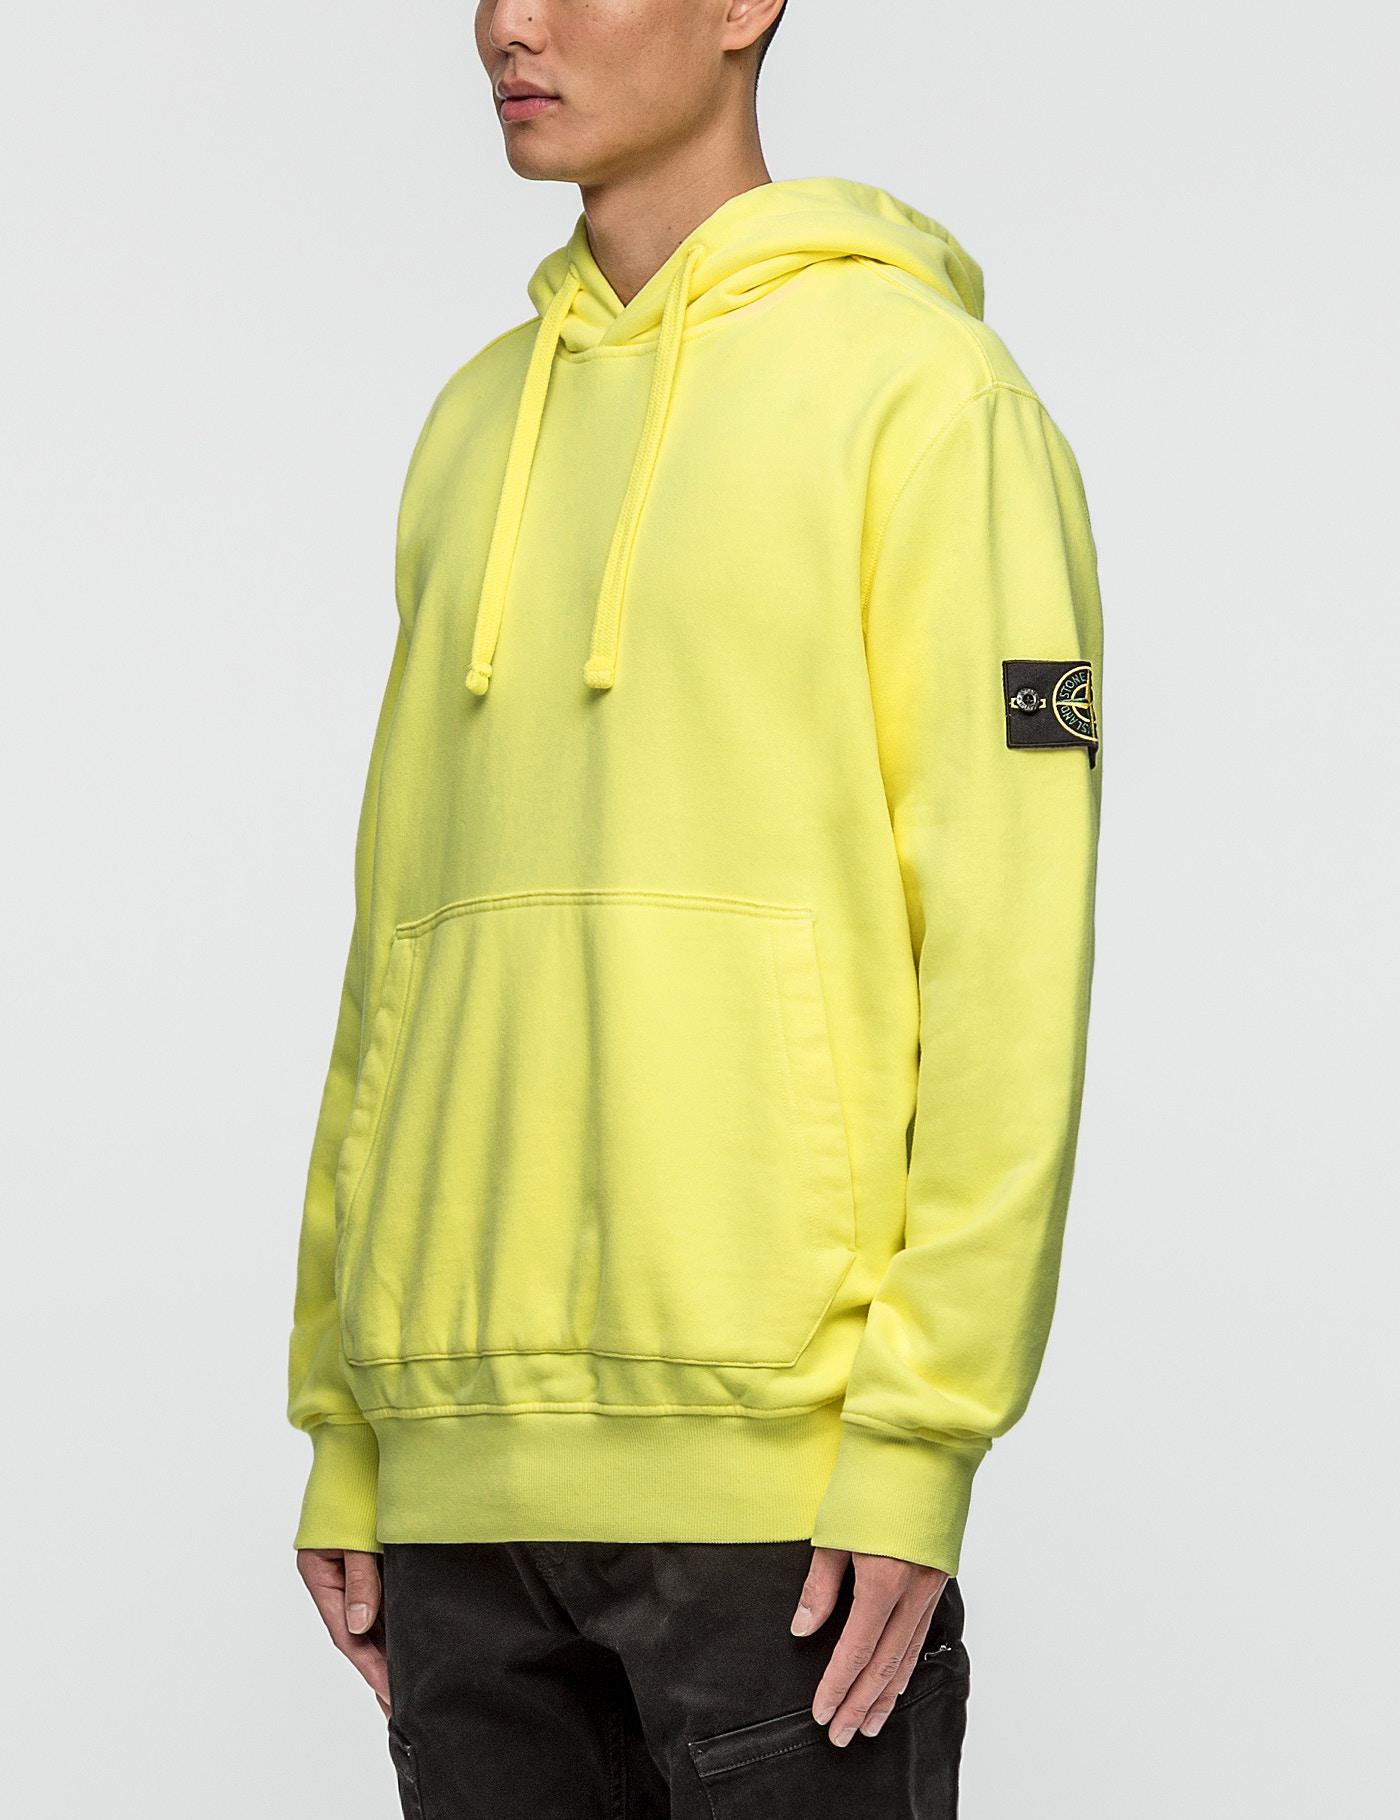 Stone Island Cotton Hooded Sweatshirt in Yellow for Men - Lyst